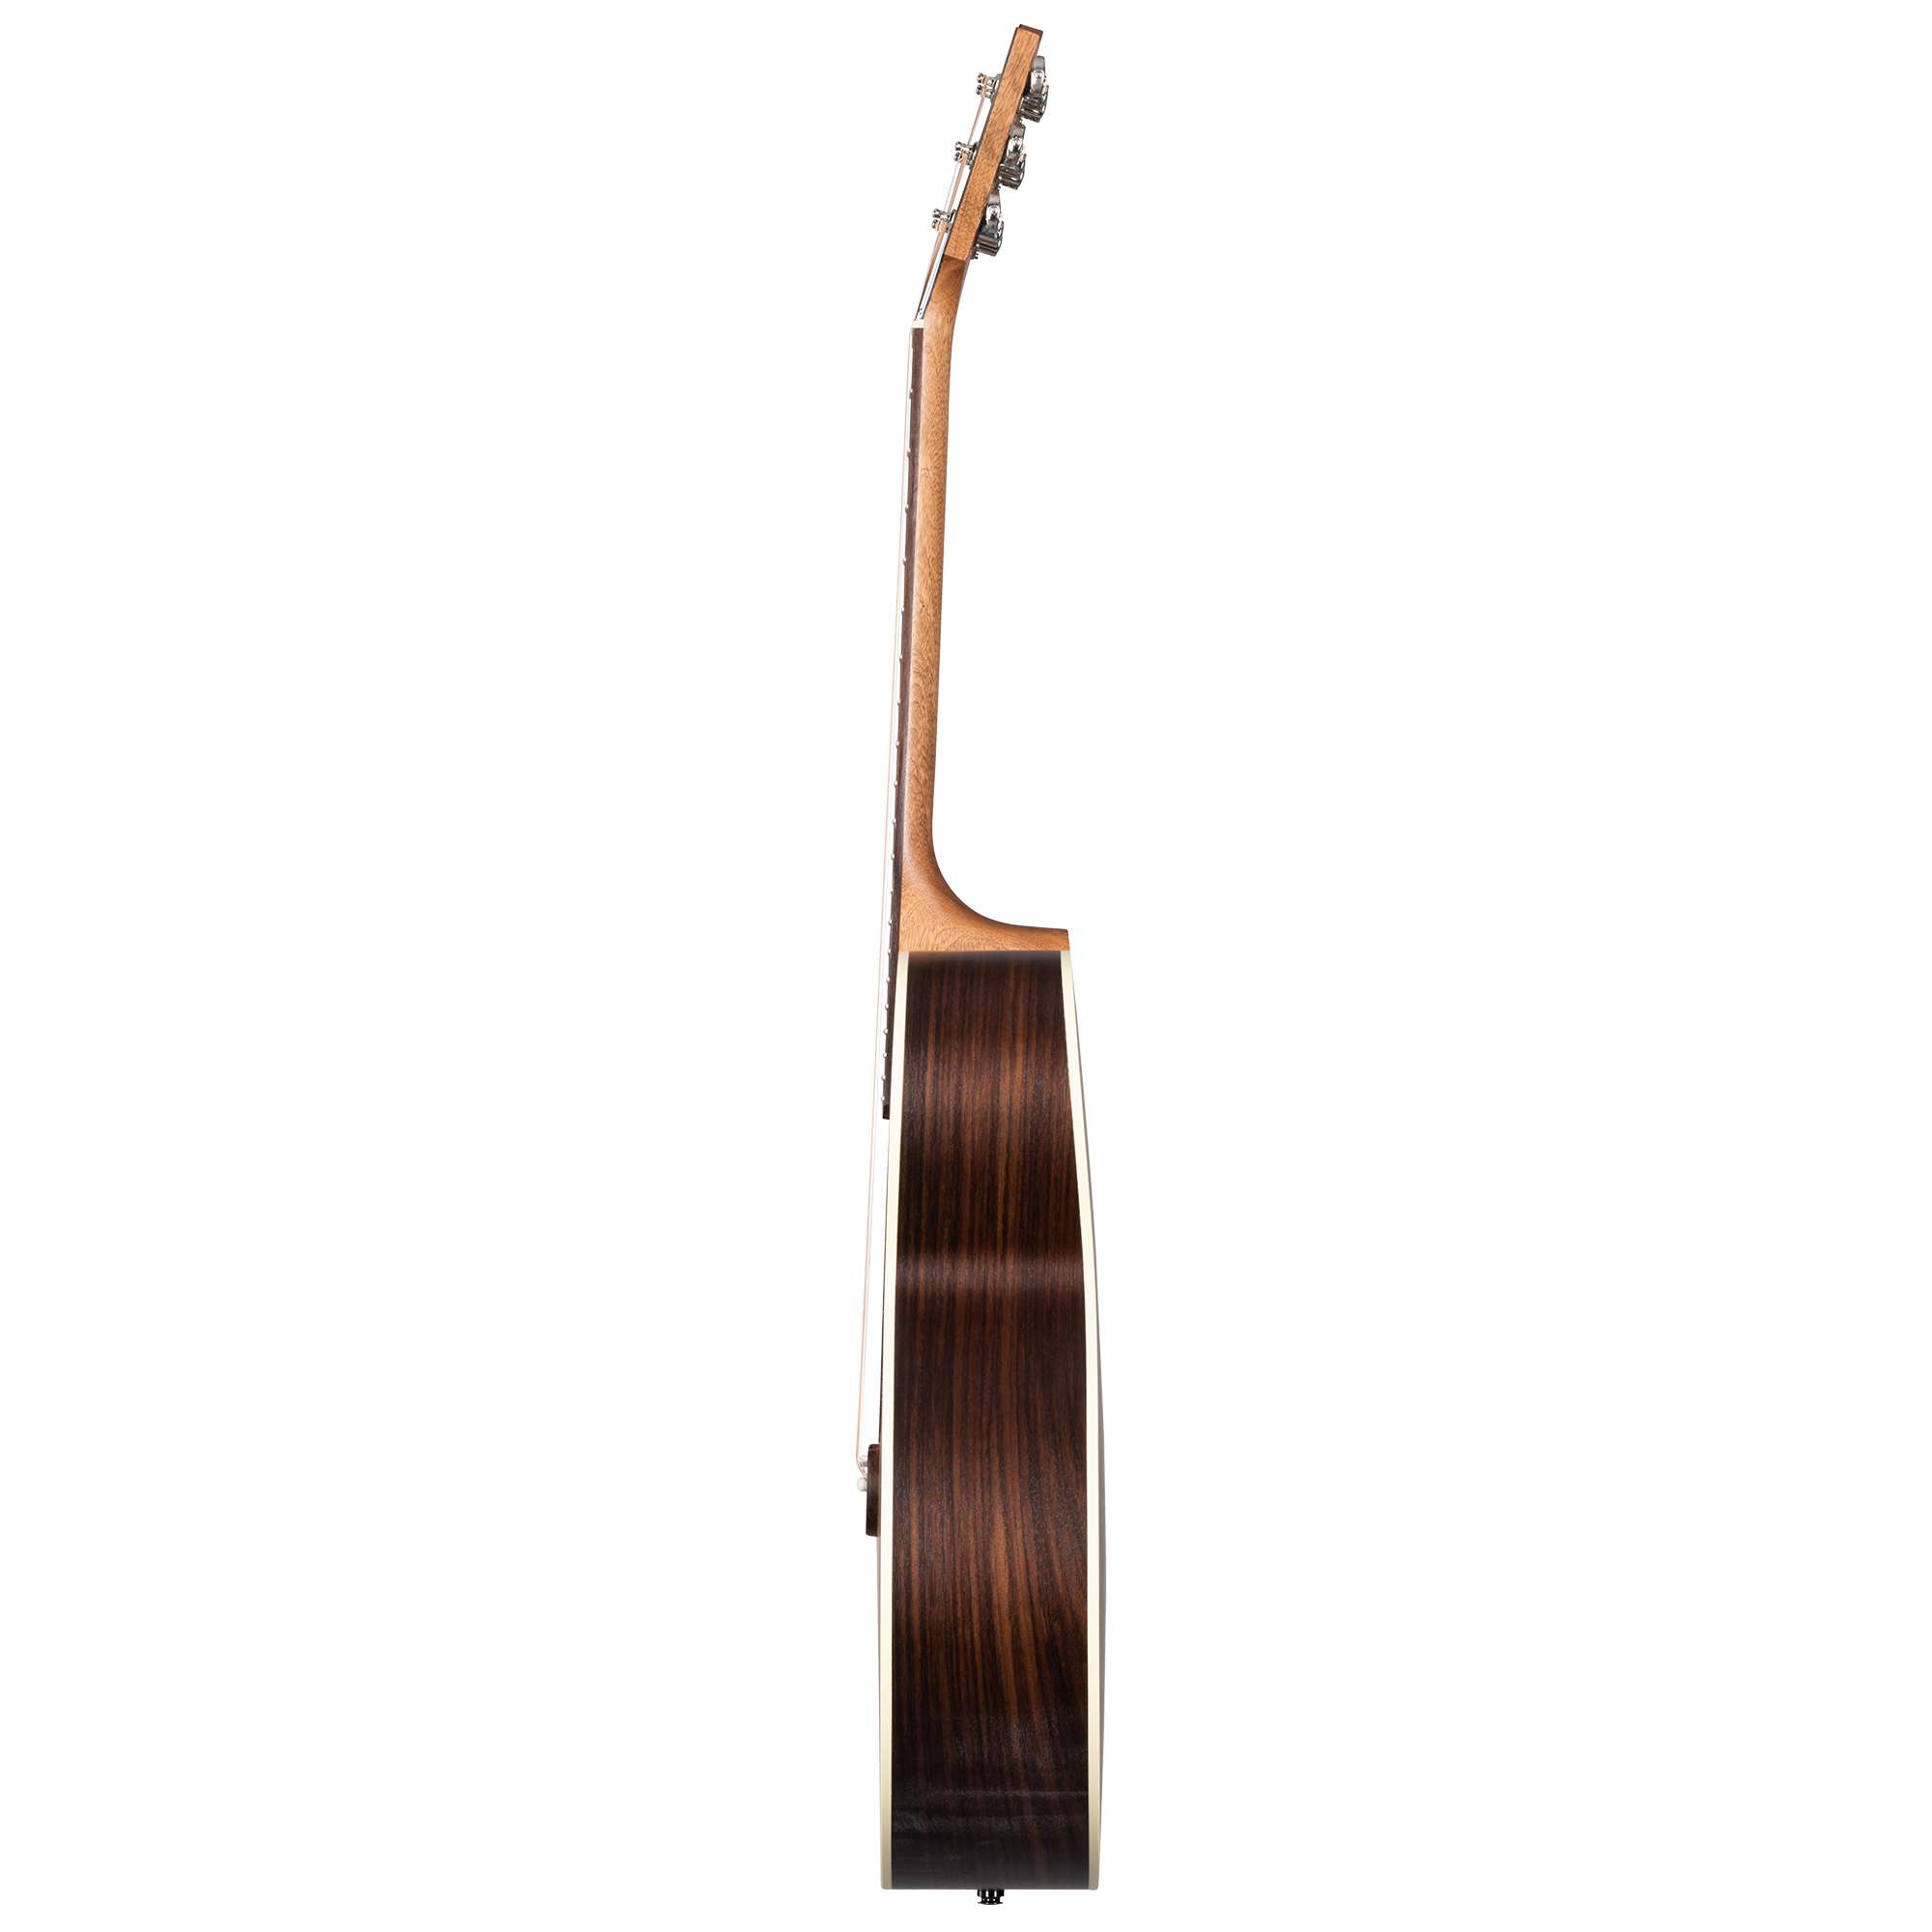 Gibson Sj-200 Studio Rosewood Acoustic-electric Guitar - Satin Rosewood Burst (Sj200)